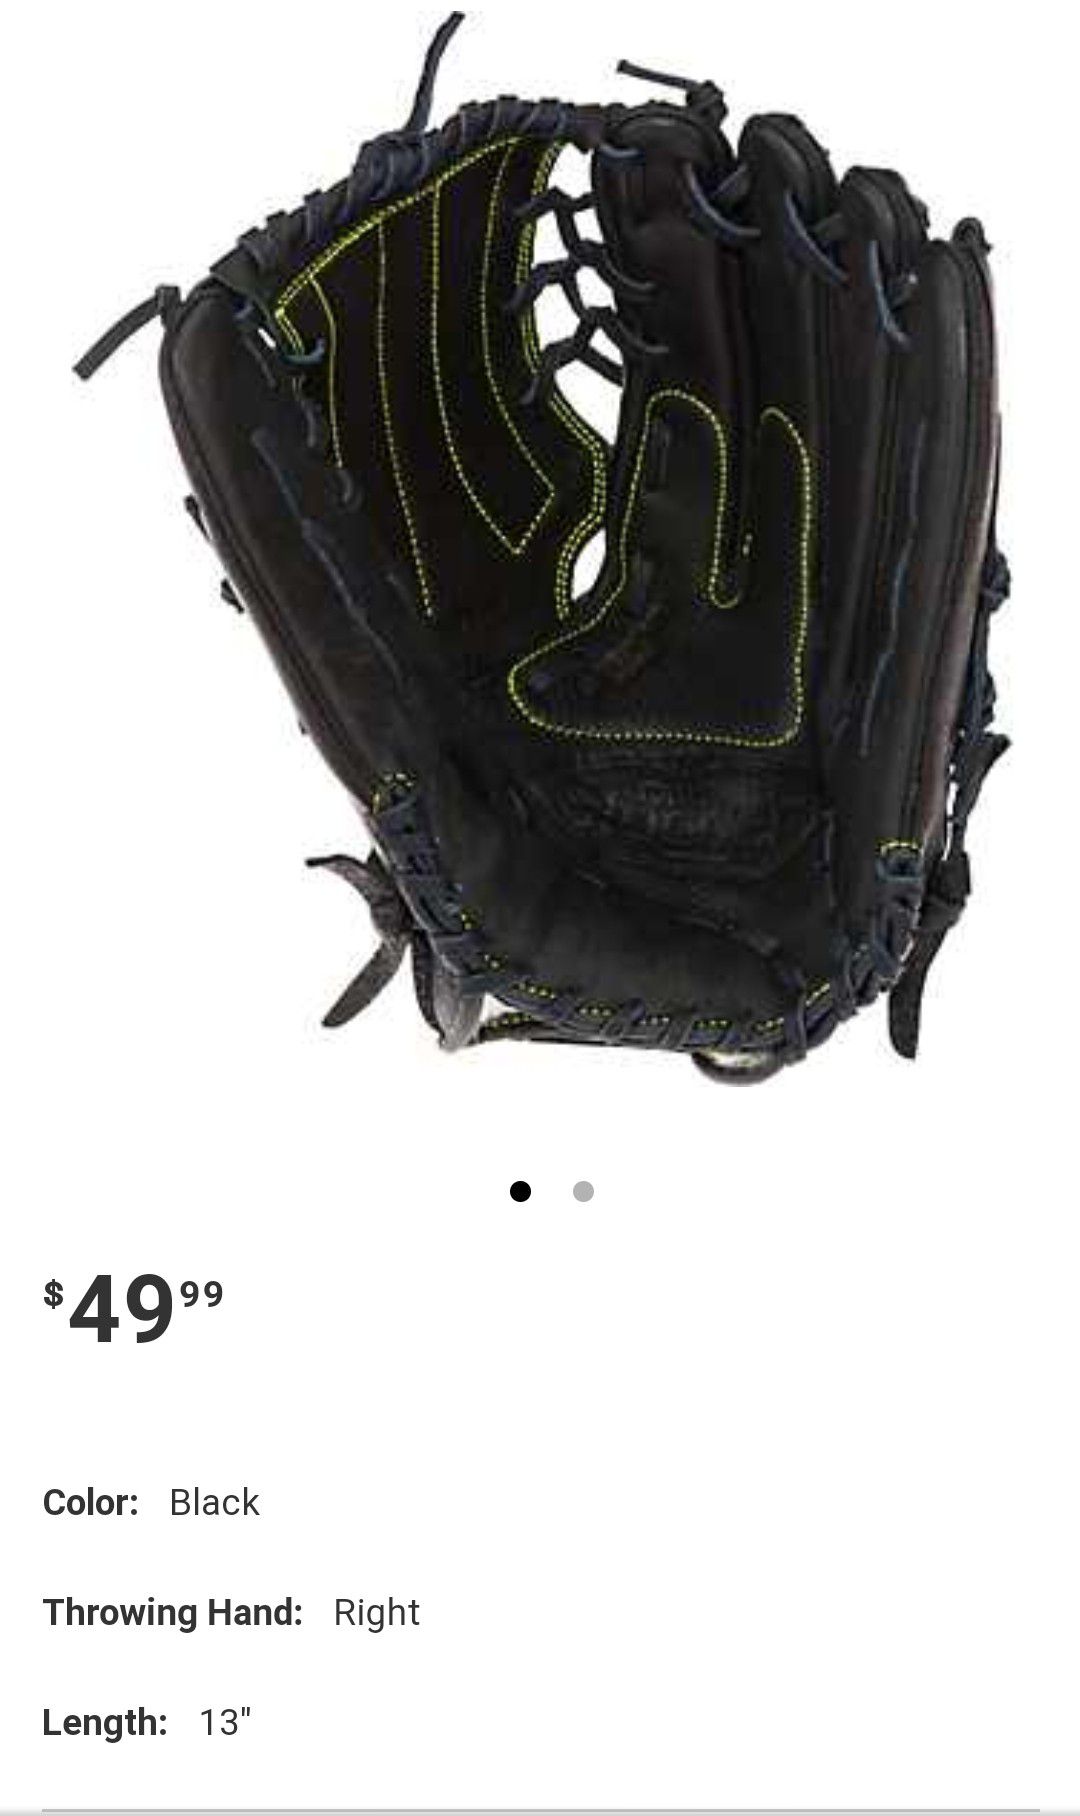 Louisville Slugger Women's Zephyr 13" Fast-Pitch Softball Glove